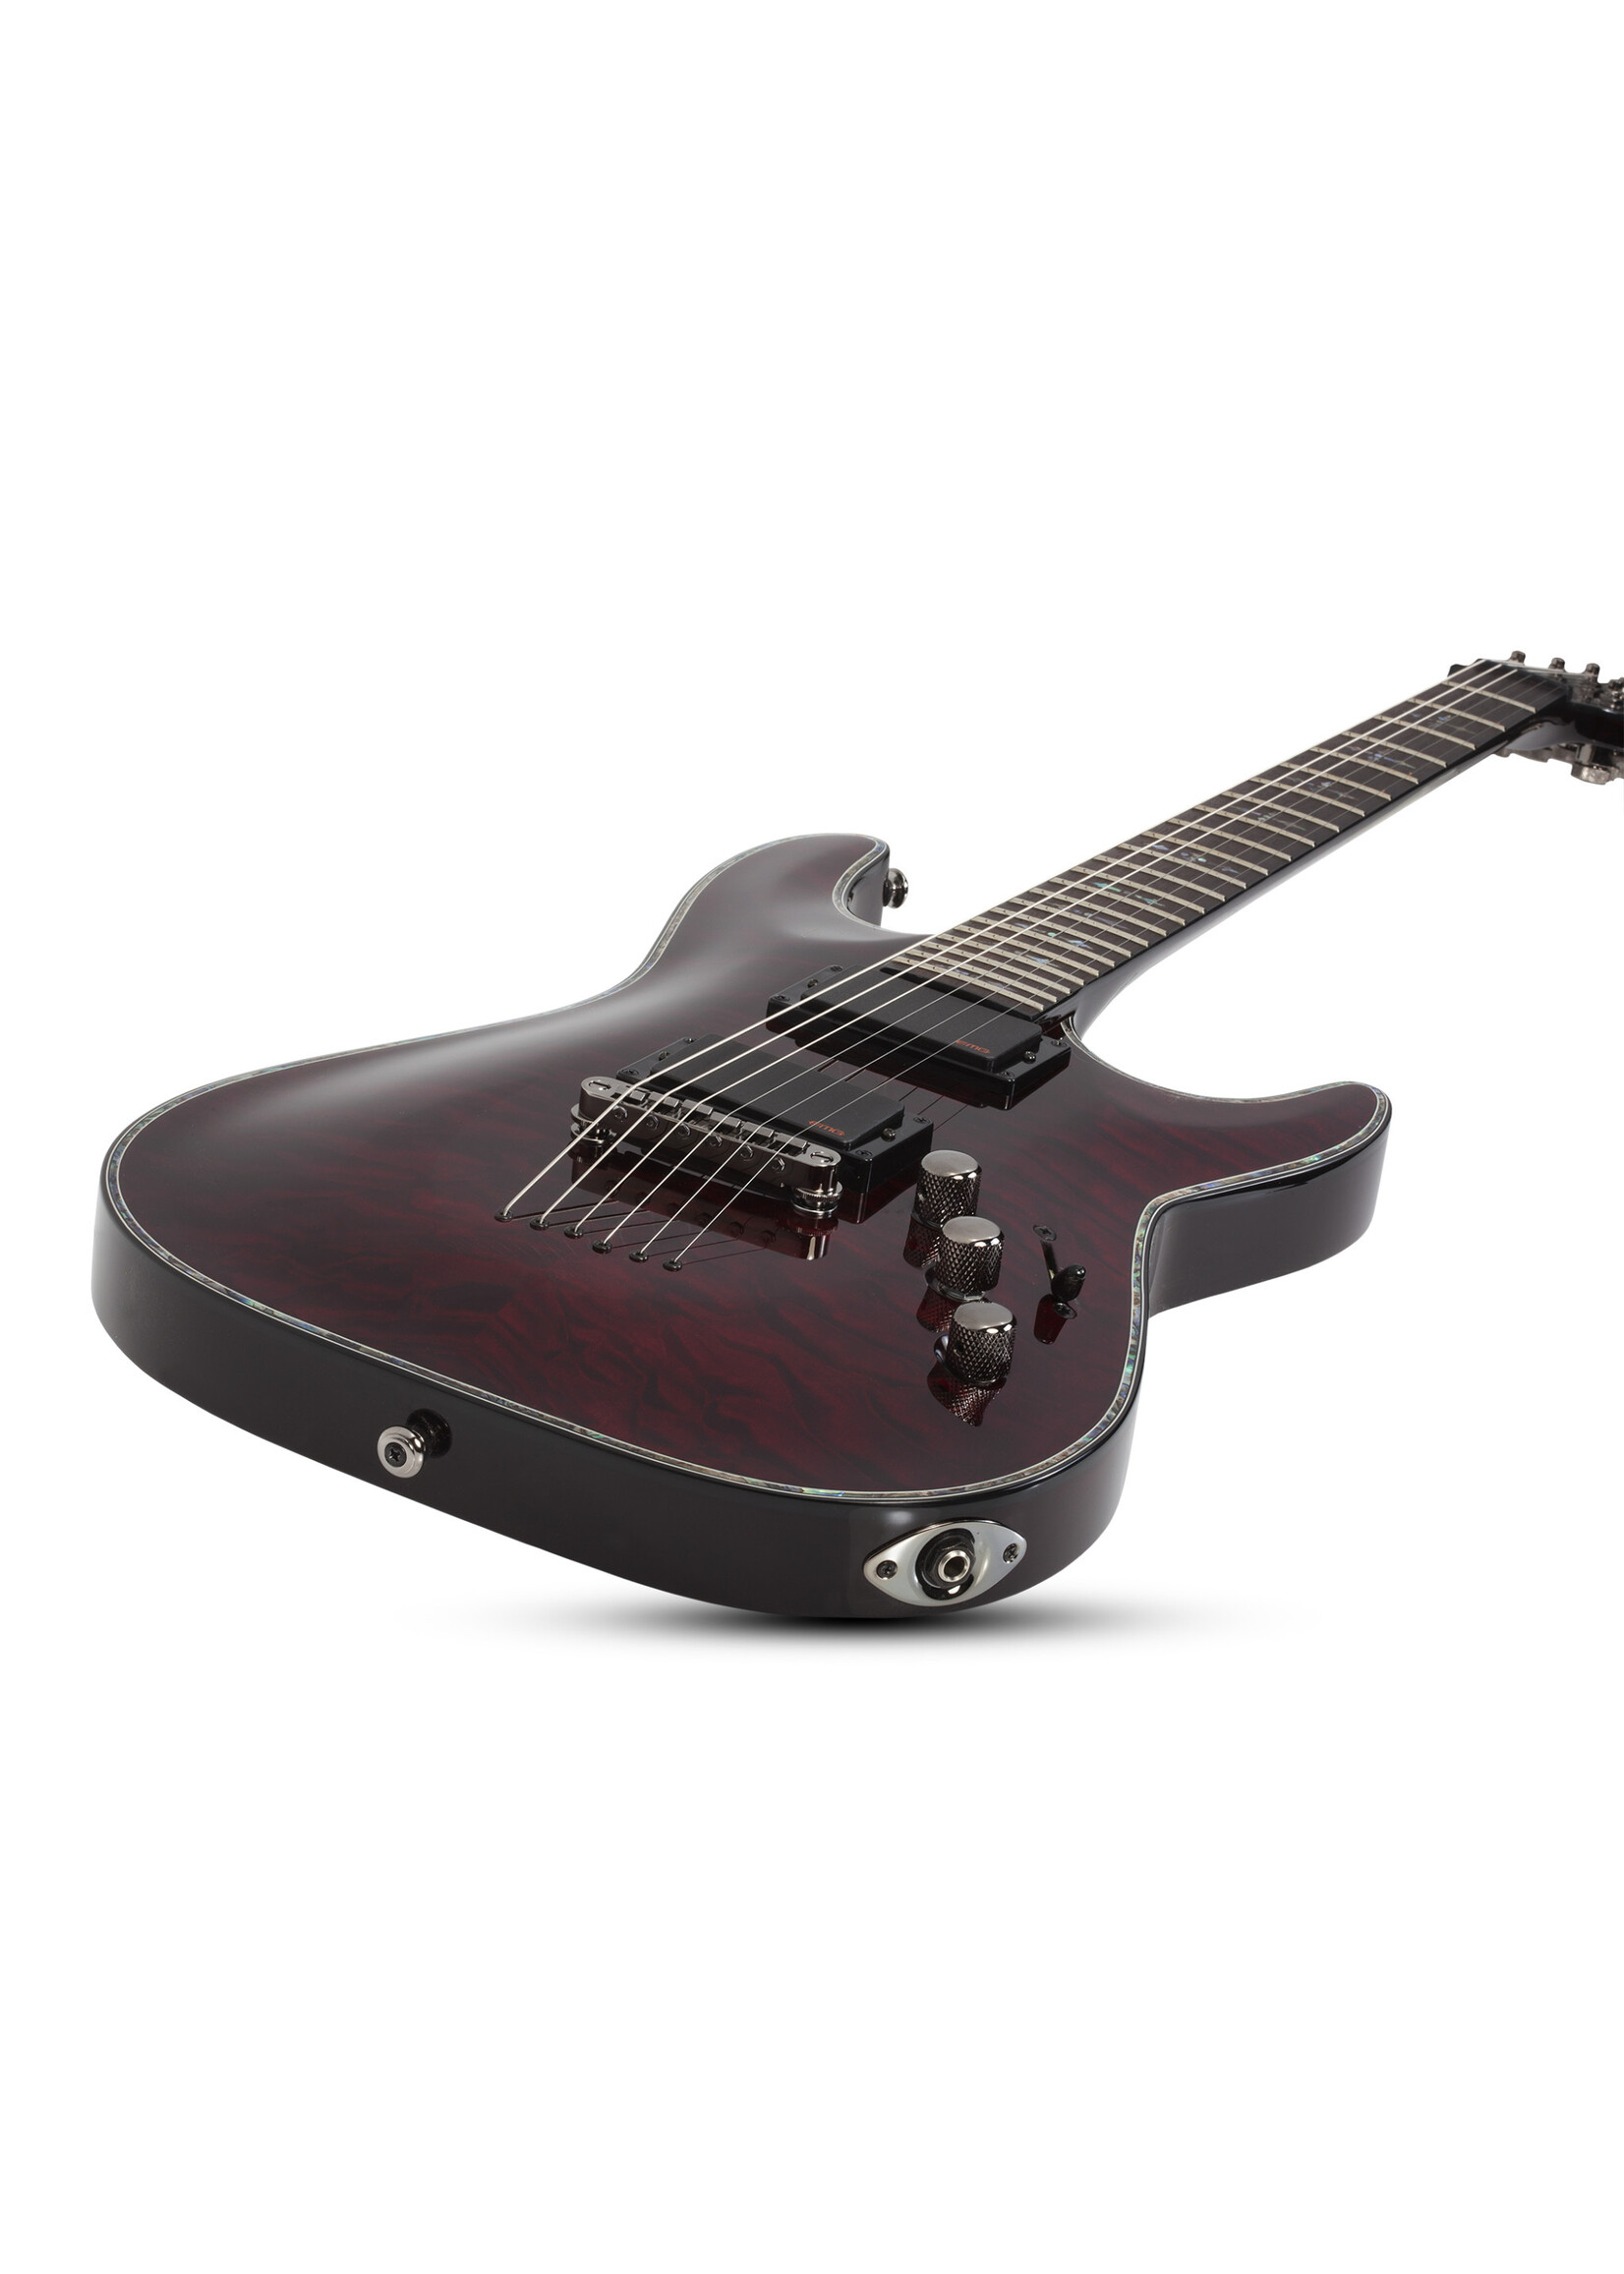 Schecter Schecter Guitar Research 1788 Hellraiser C-1 Electric Guitar - Black Cherry